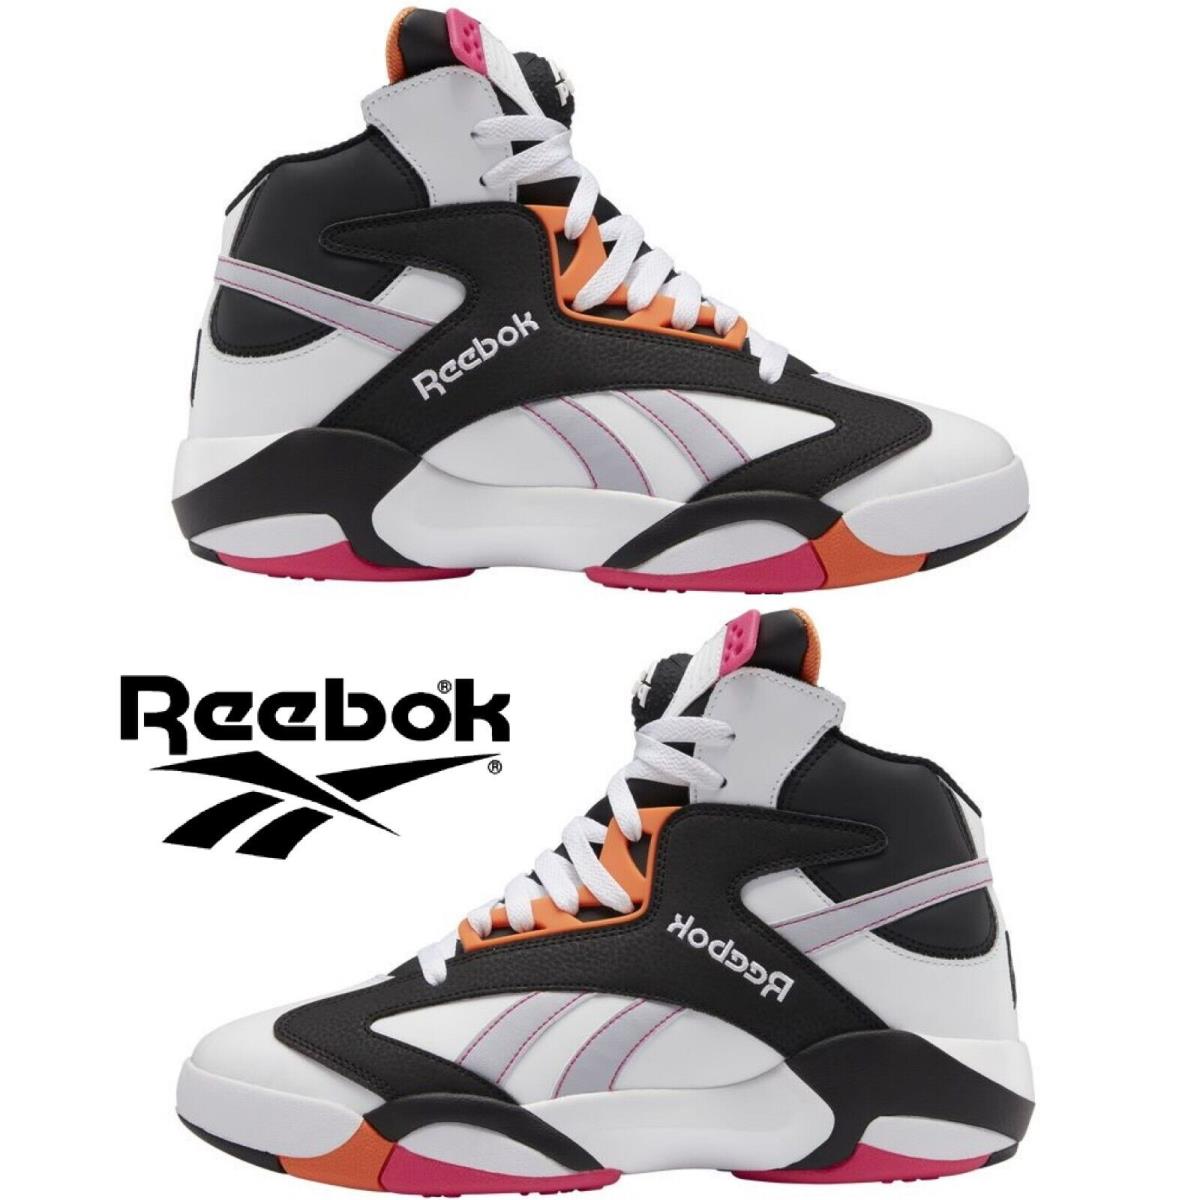 Reebok Shaq Attaq Basketball Shoes Men`s Sneakers Running Casual Sport Black - Black, Manufacturer: Black/Pink/Grey